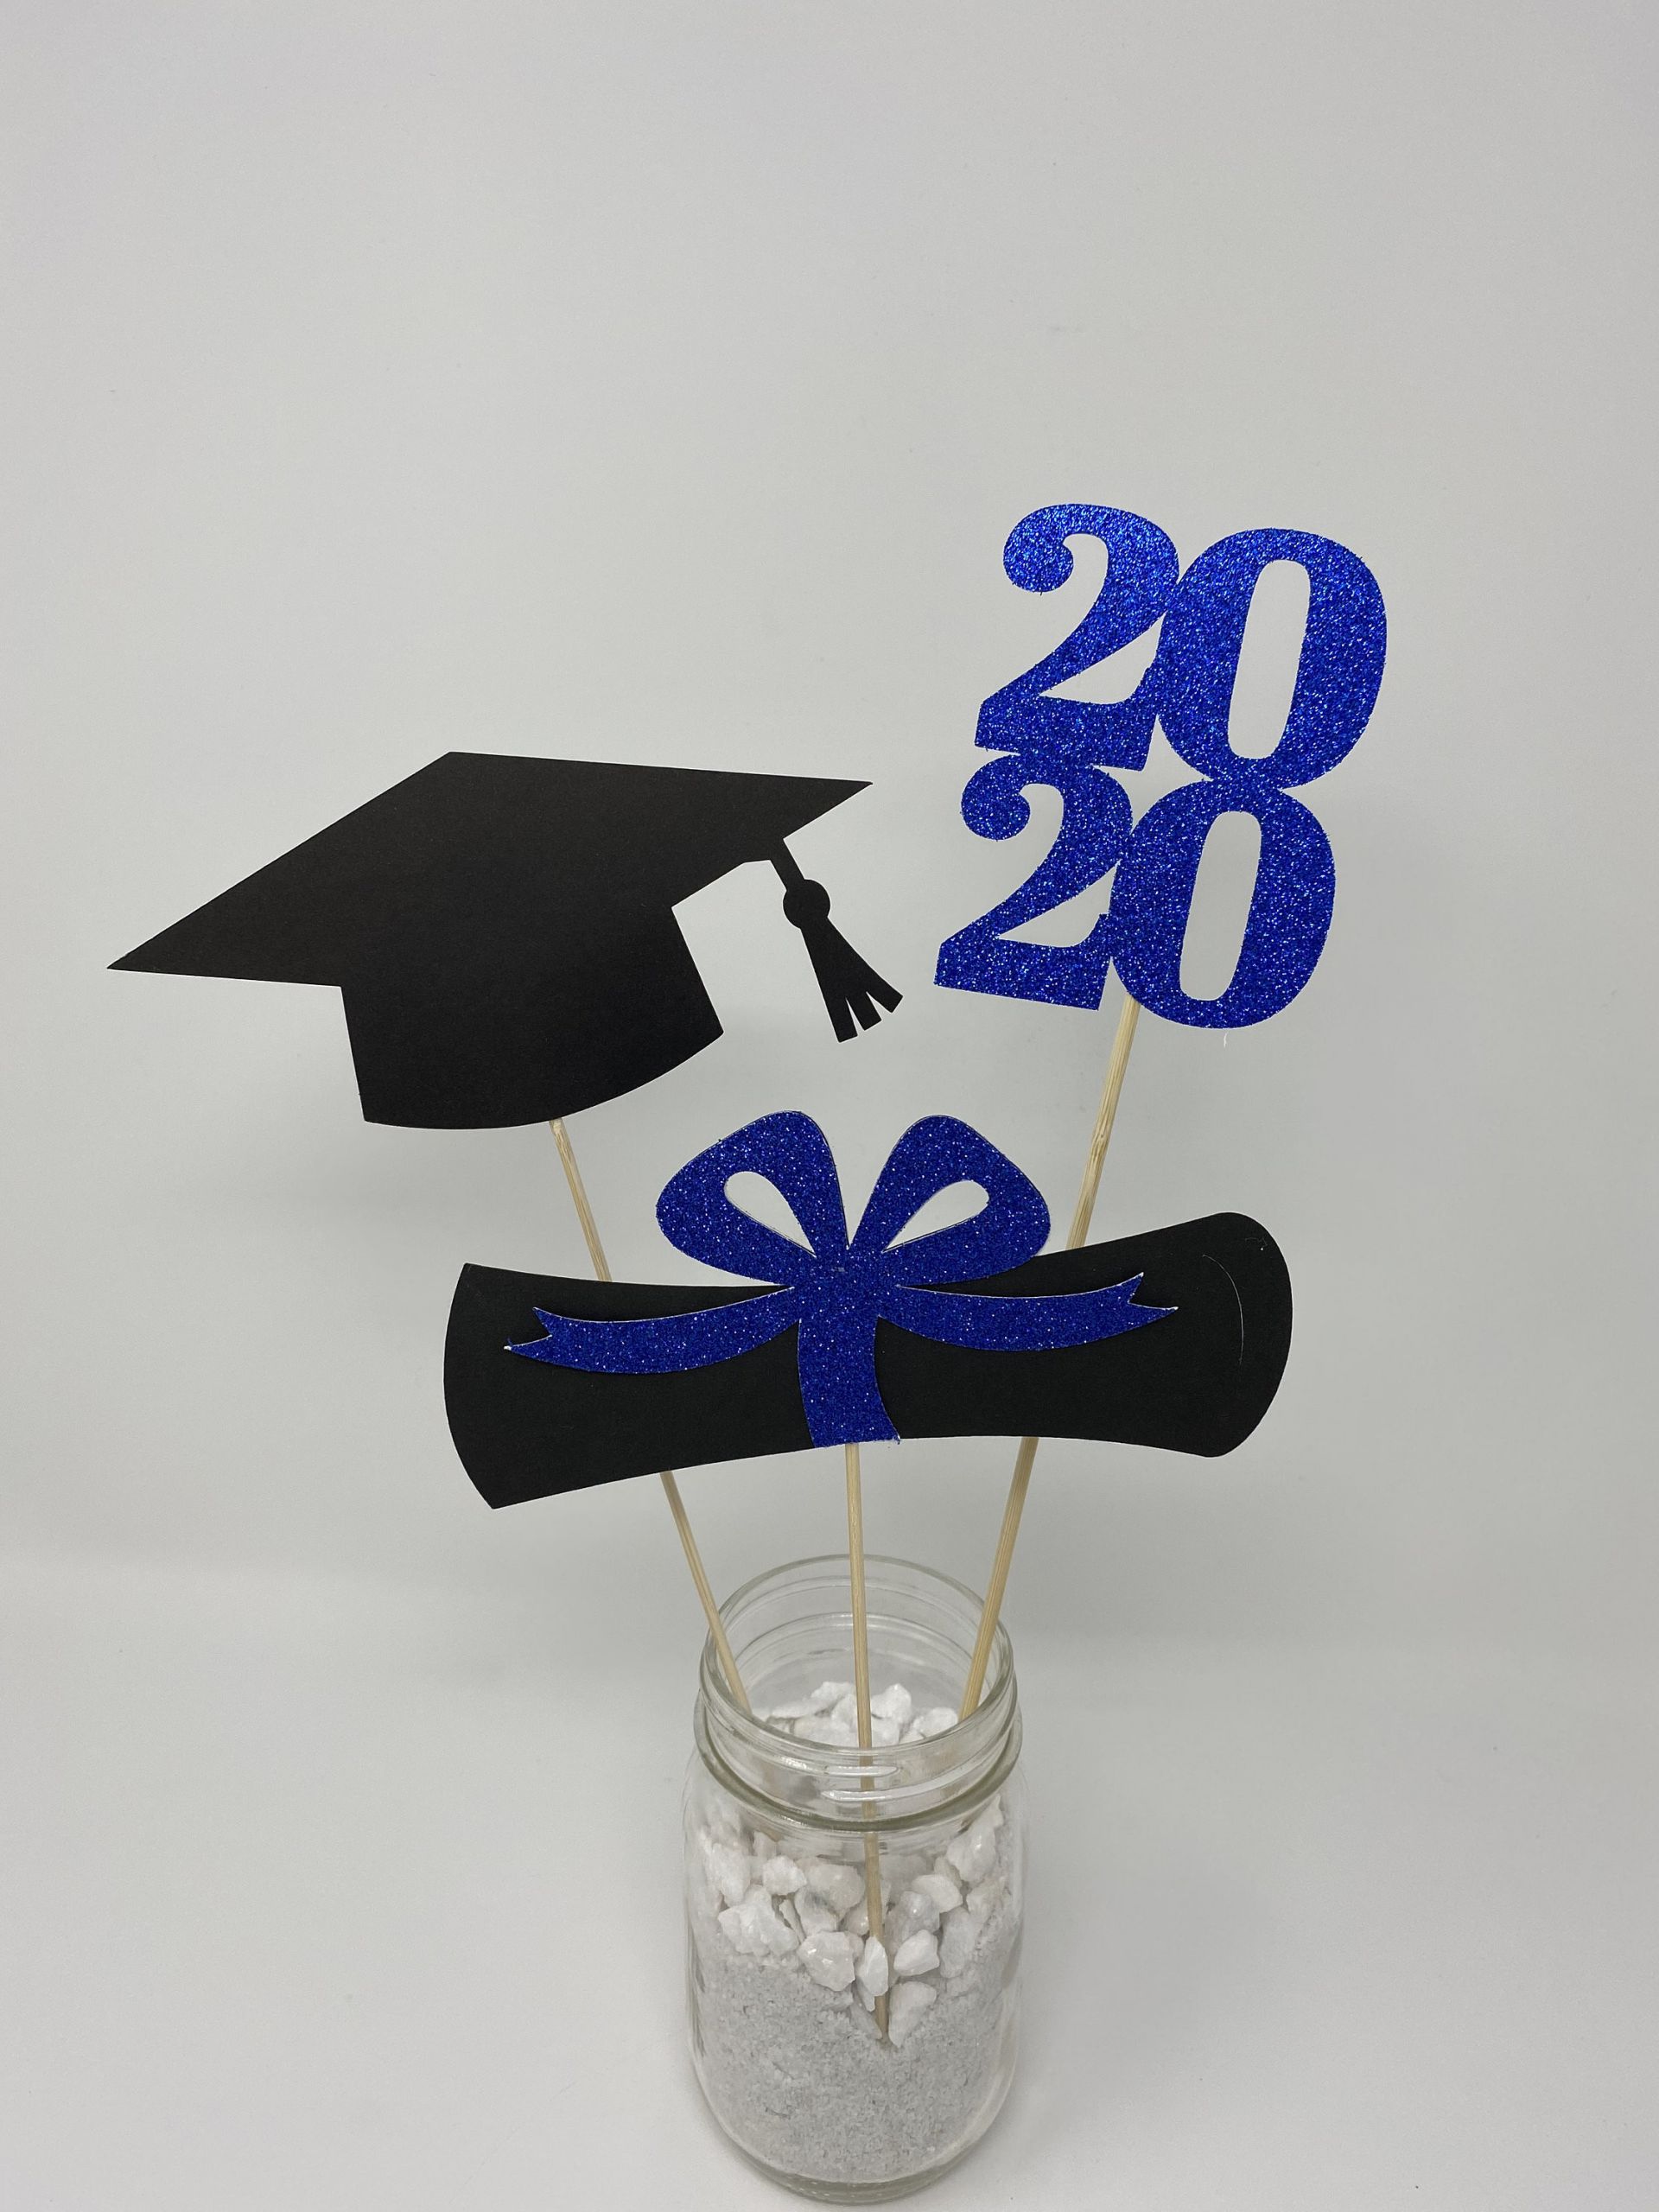 Graduation Party Ideas 2020
 Graduation party decorations 2020 grad Graduation